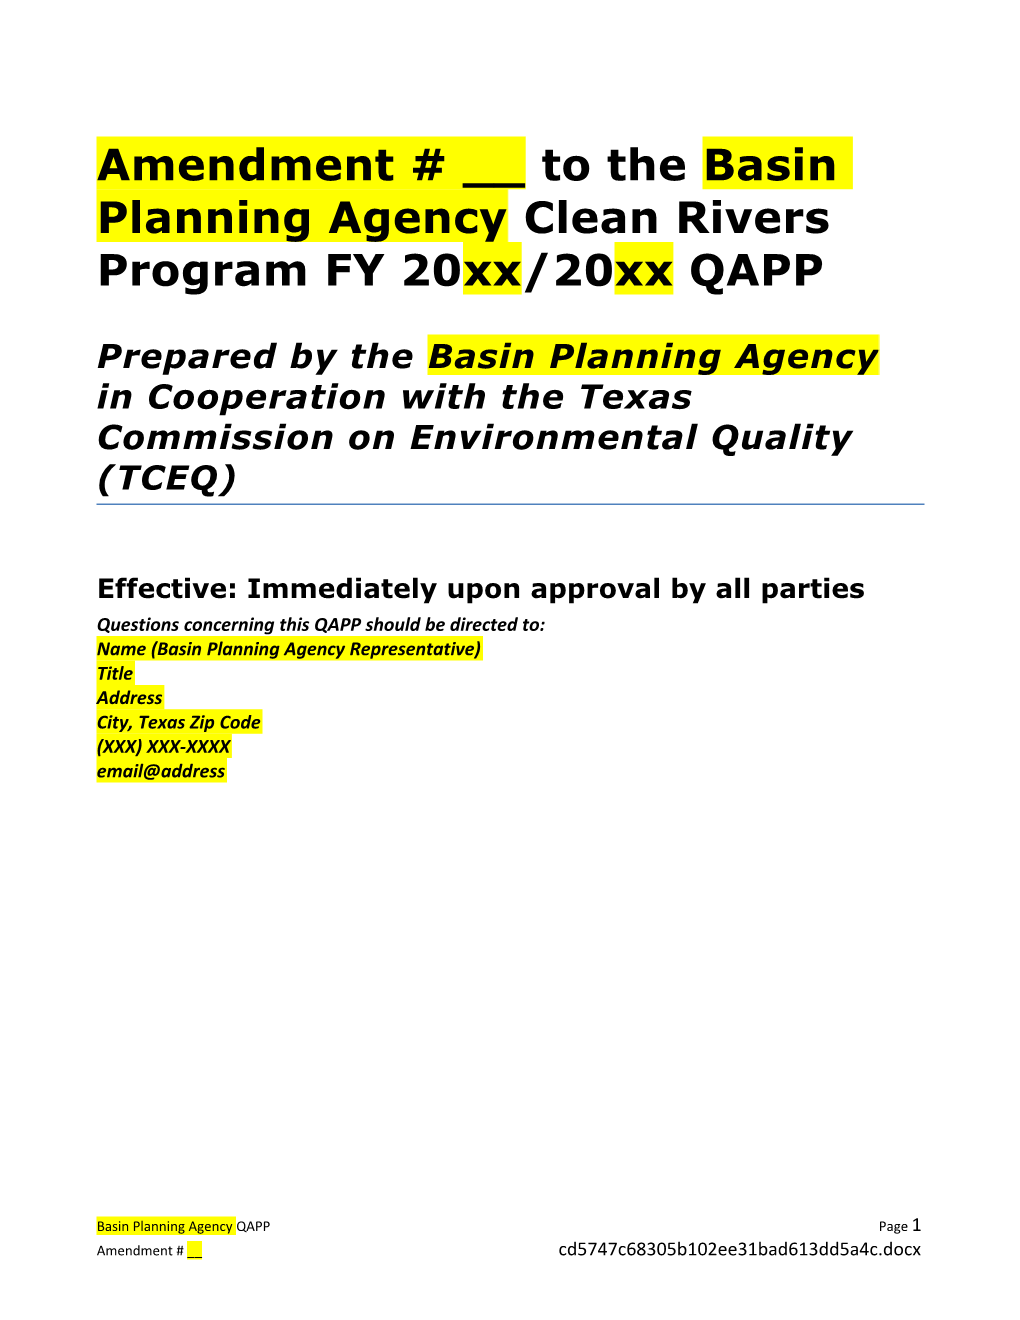 Amendment # __ to the Basin Planning Agency Clean Rivers Program FY 20Xx/20Xx QAPP